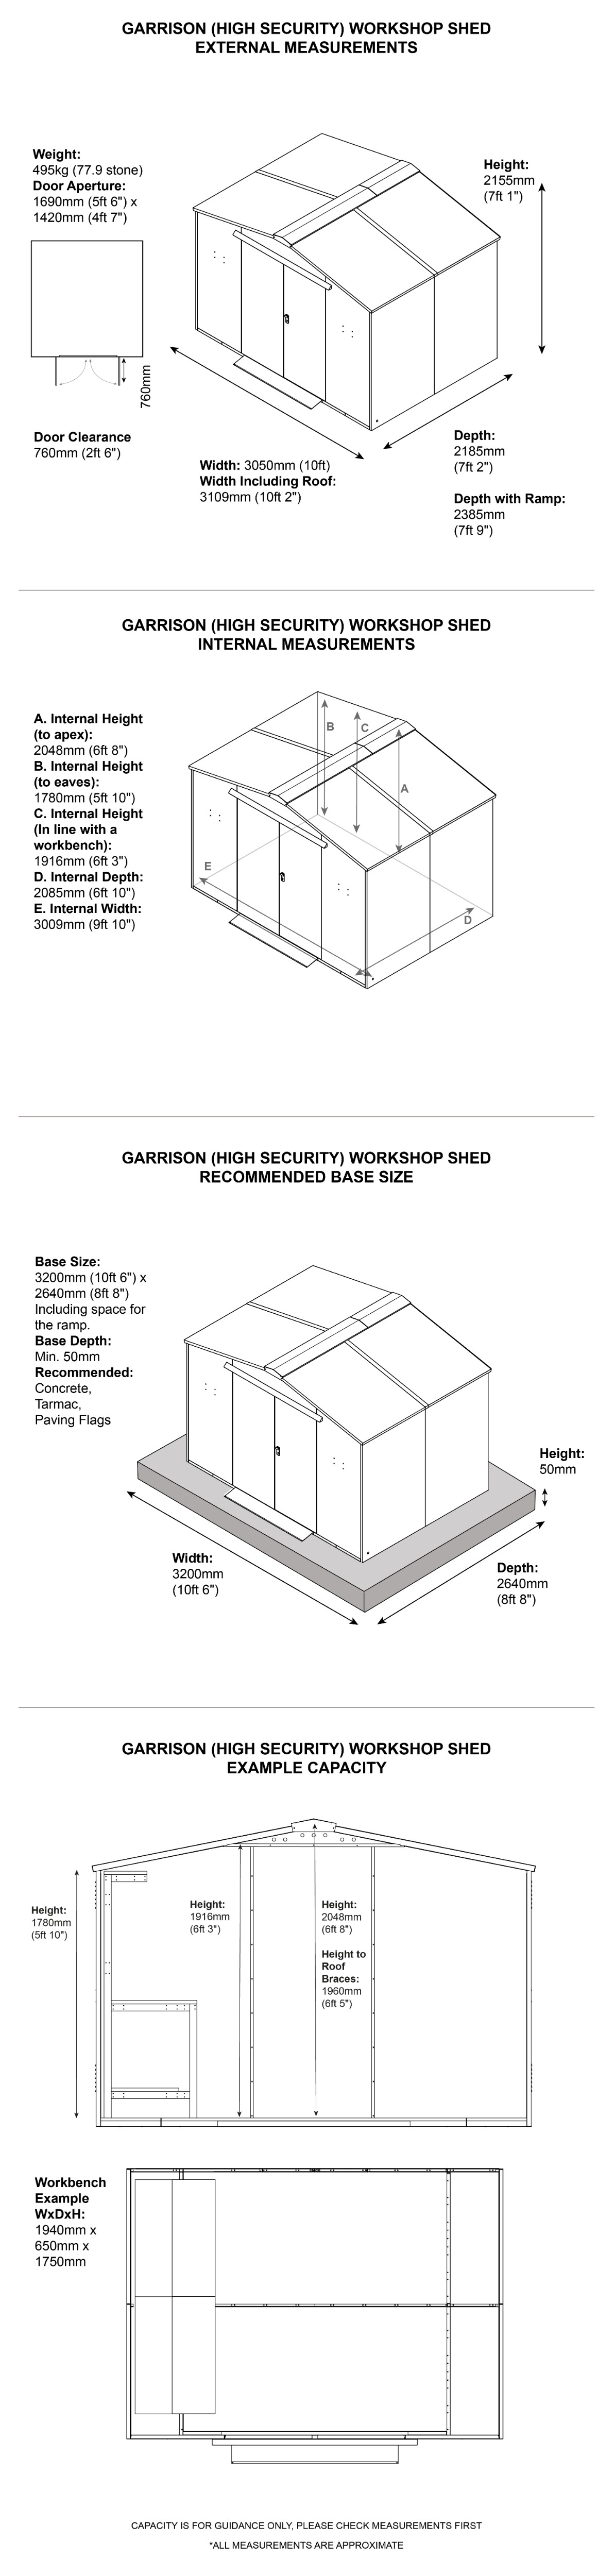 Garrison Workshop Dimensions